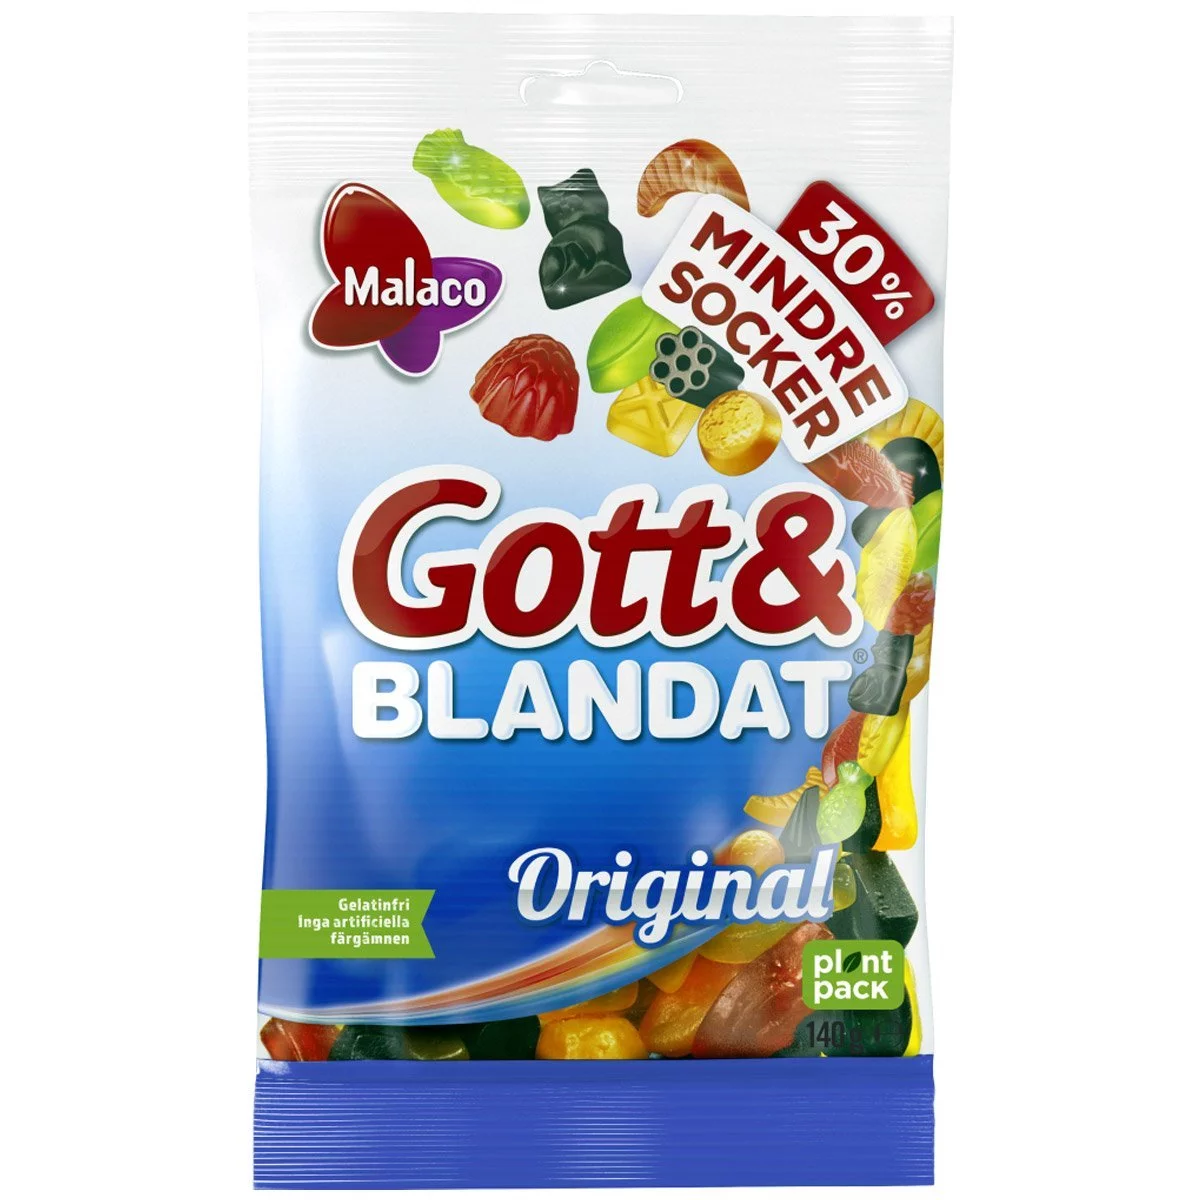 Malaco Gott & Blandat Original 30% mindre socker (110g) 1